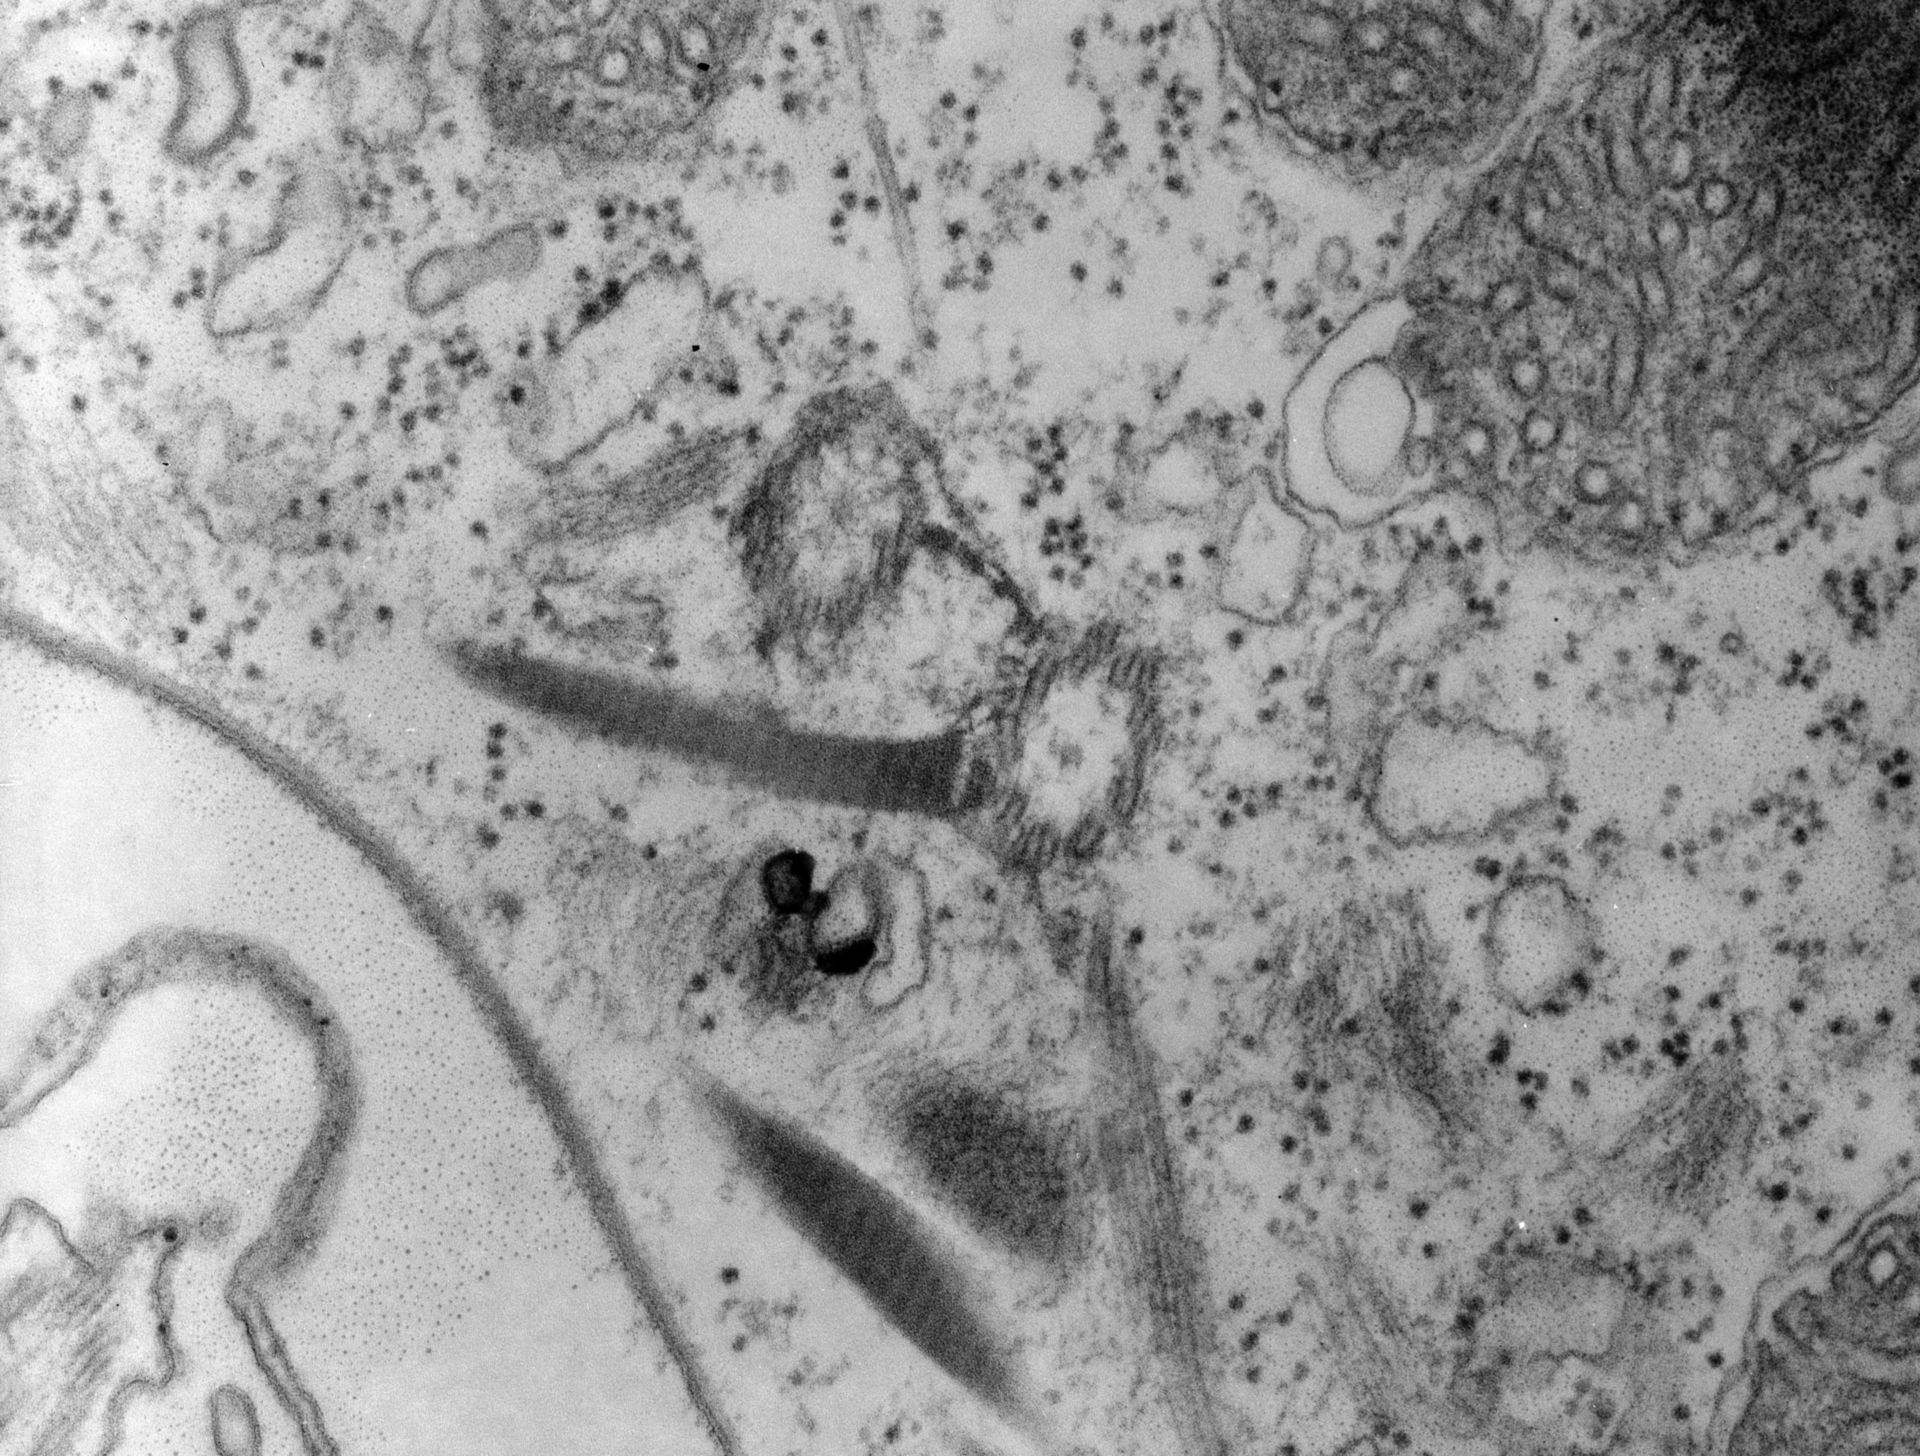 Paramecium multimicronucleatum (Microtubule basal body) - CIL:12067